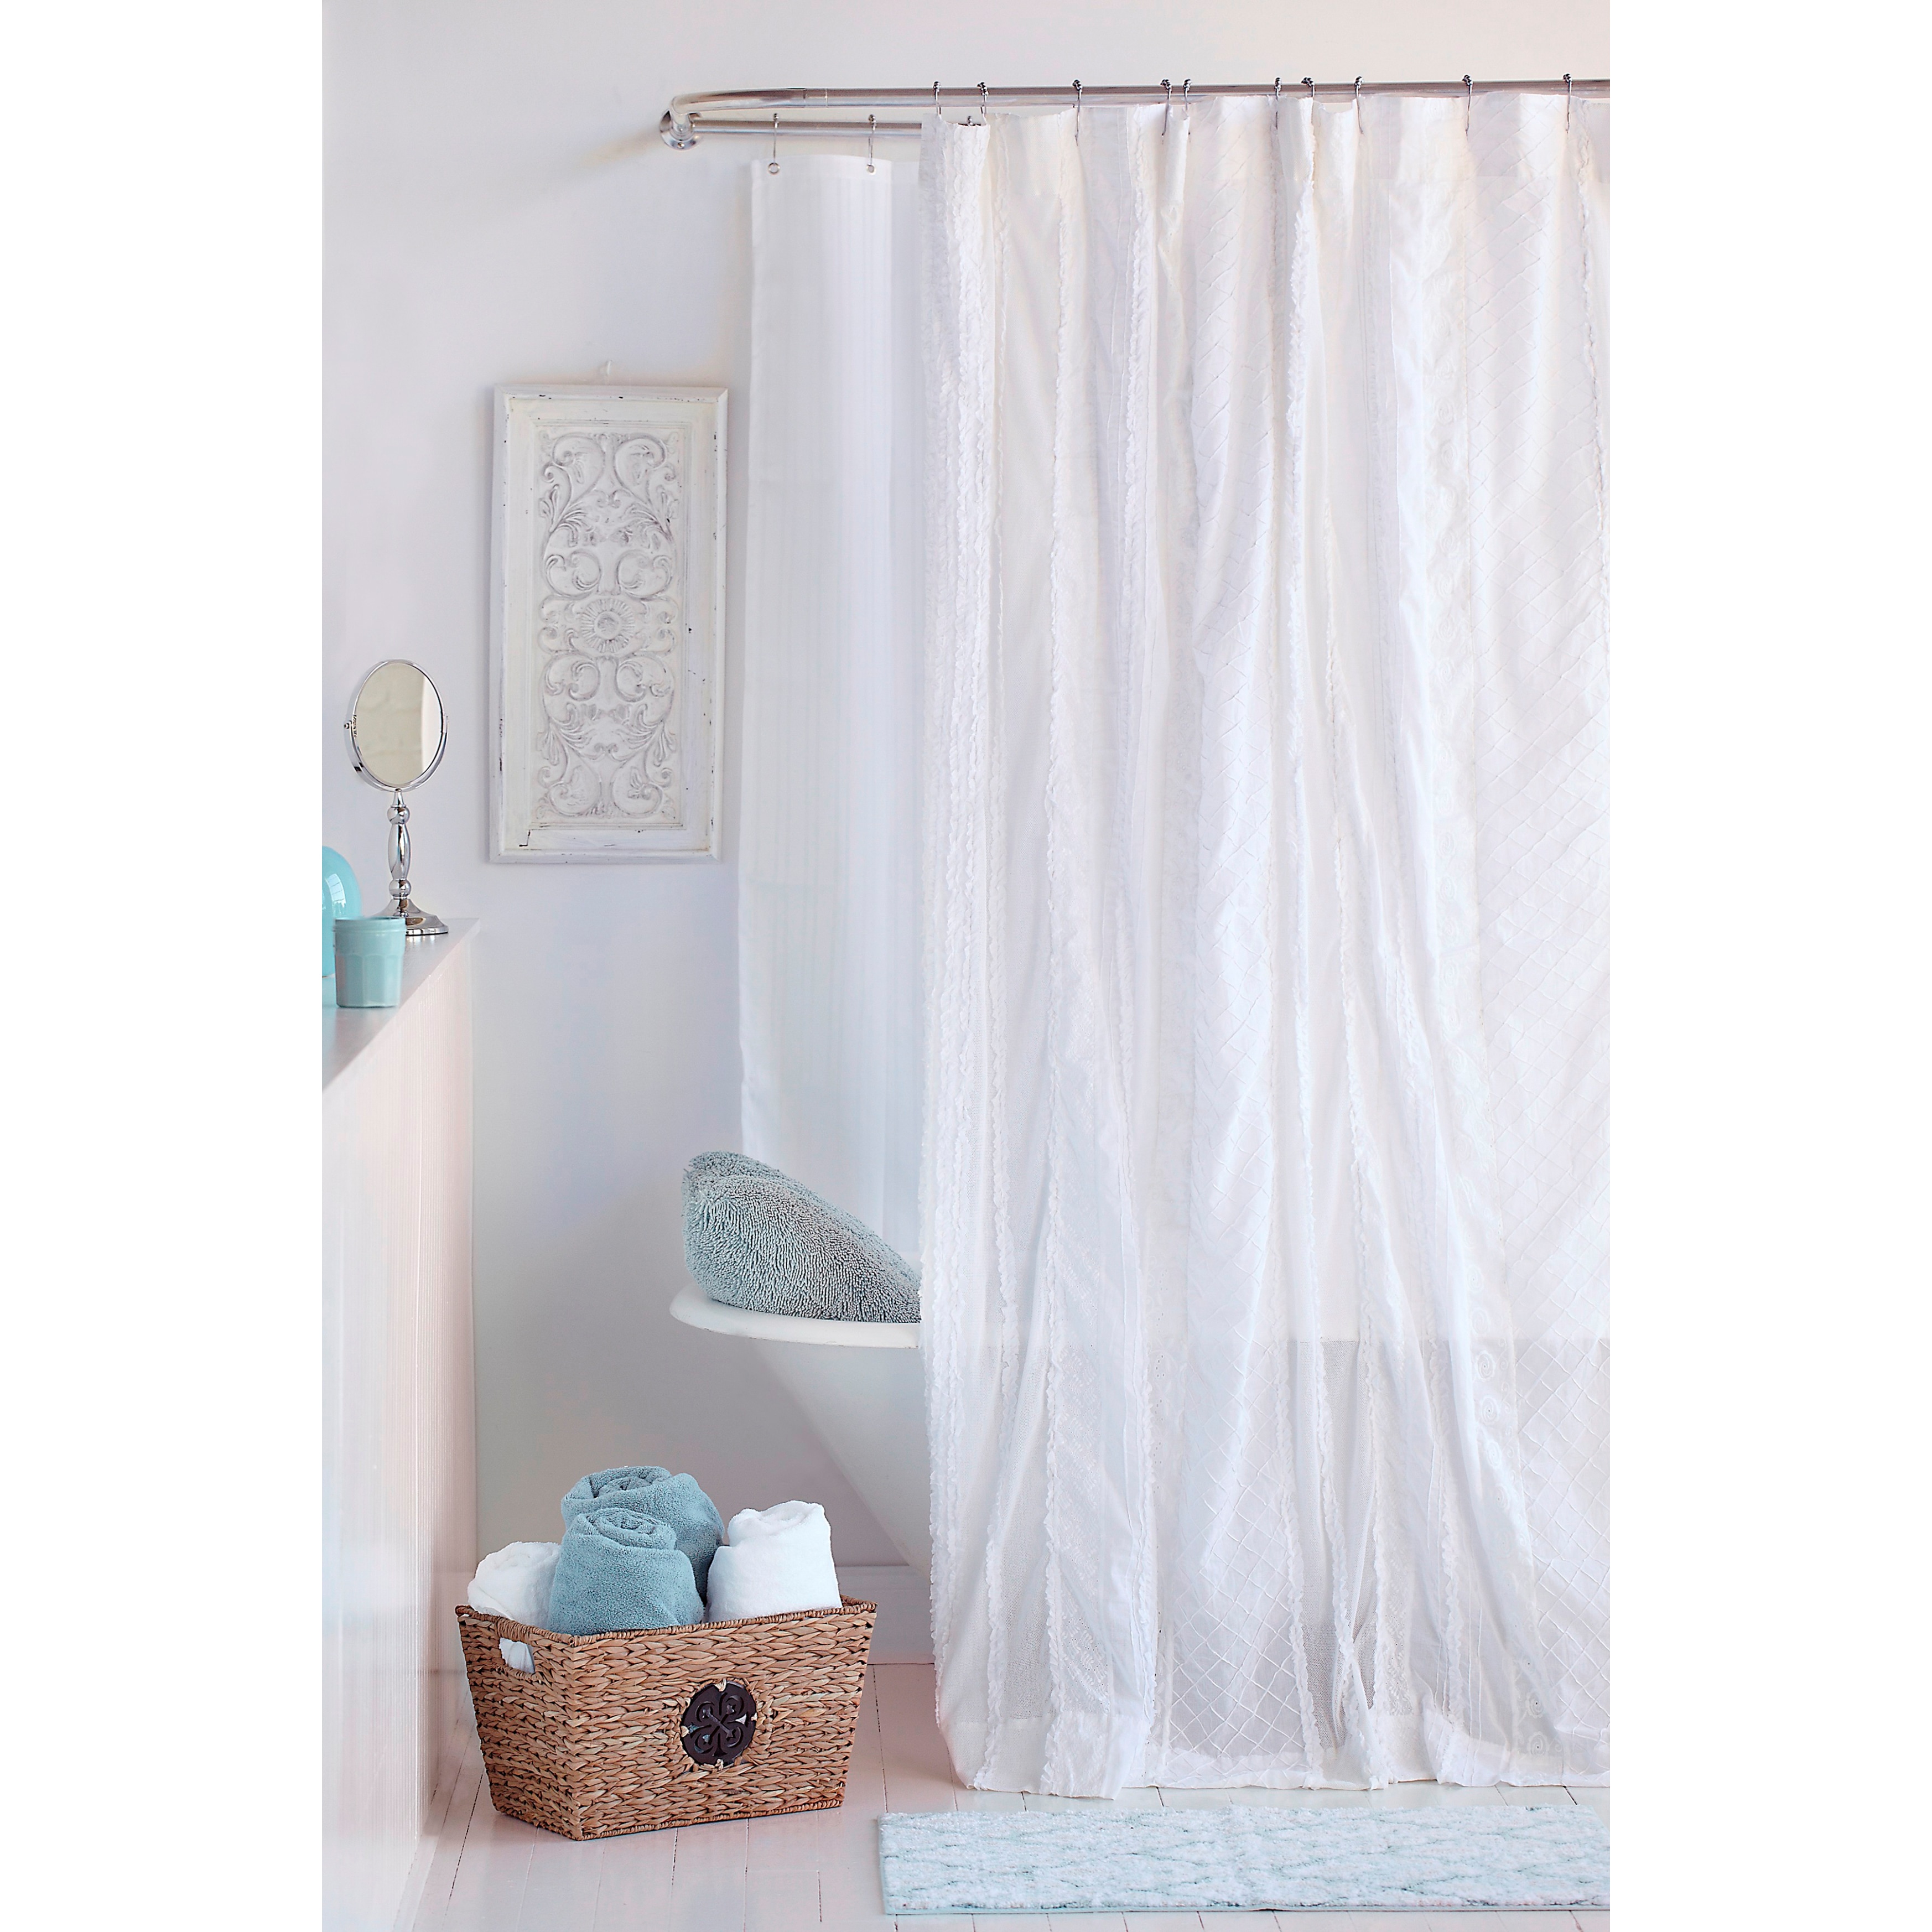 Diy Outdoor Curtain Rod Vintage Pom Pom Shower C